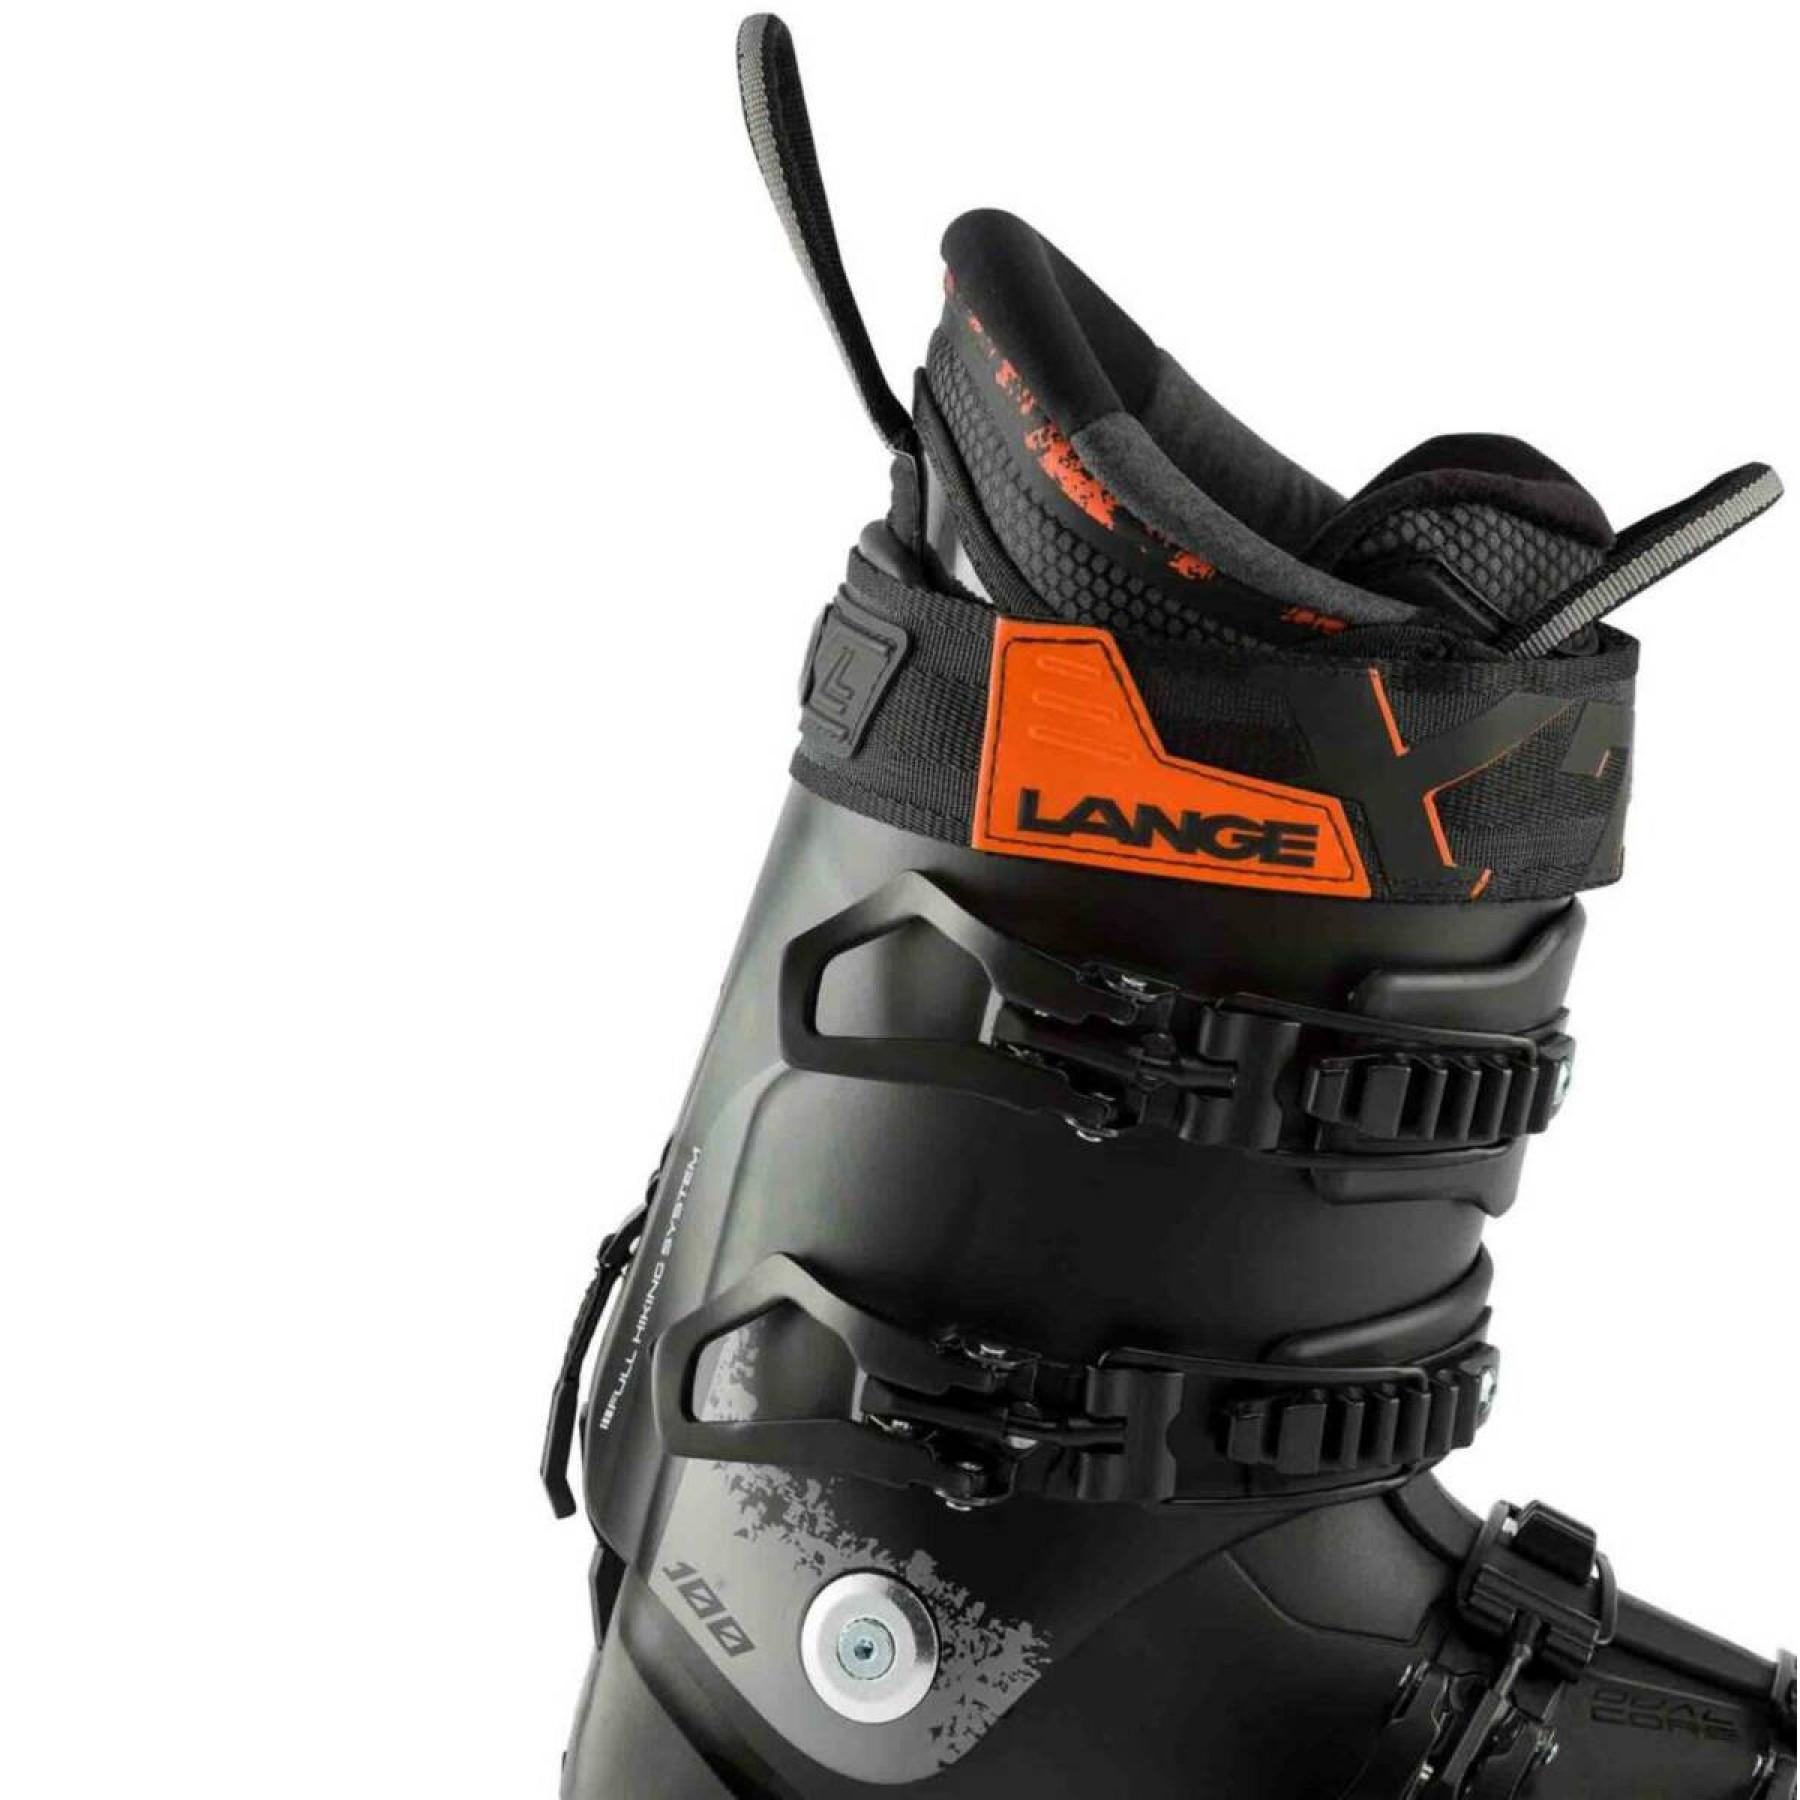 Ski boots Lange xt3 100